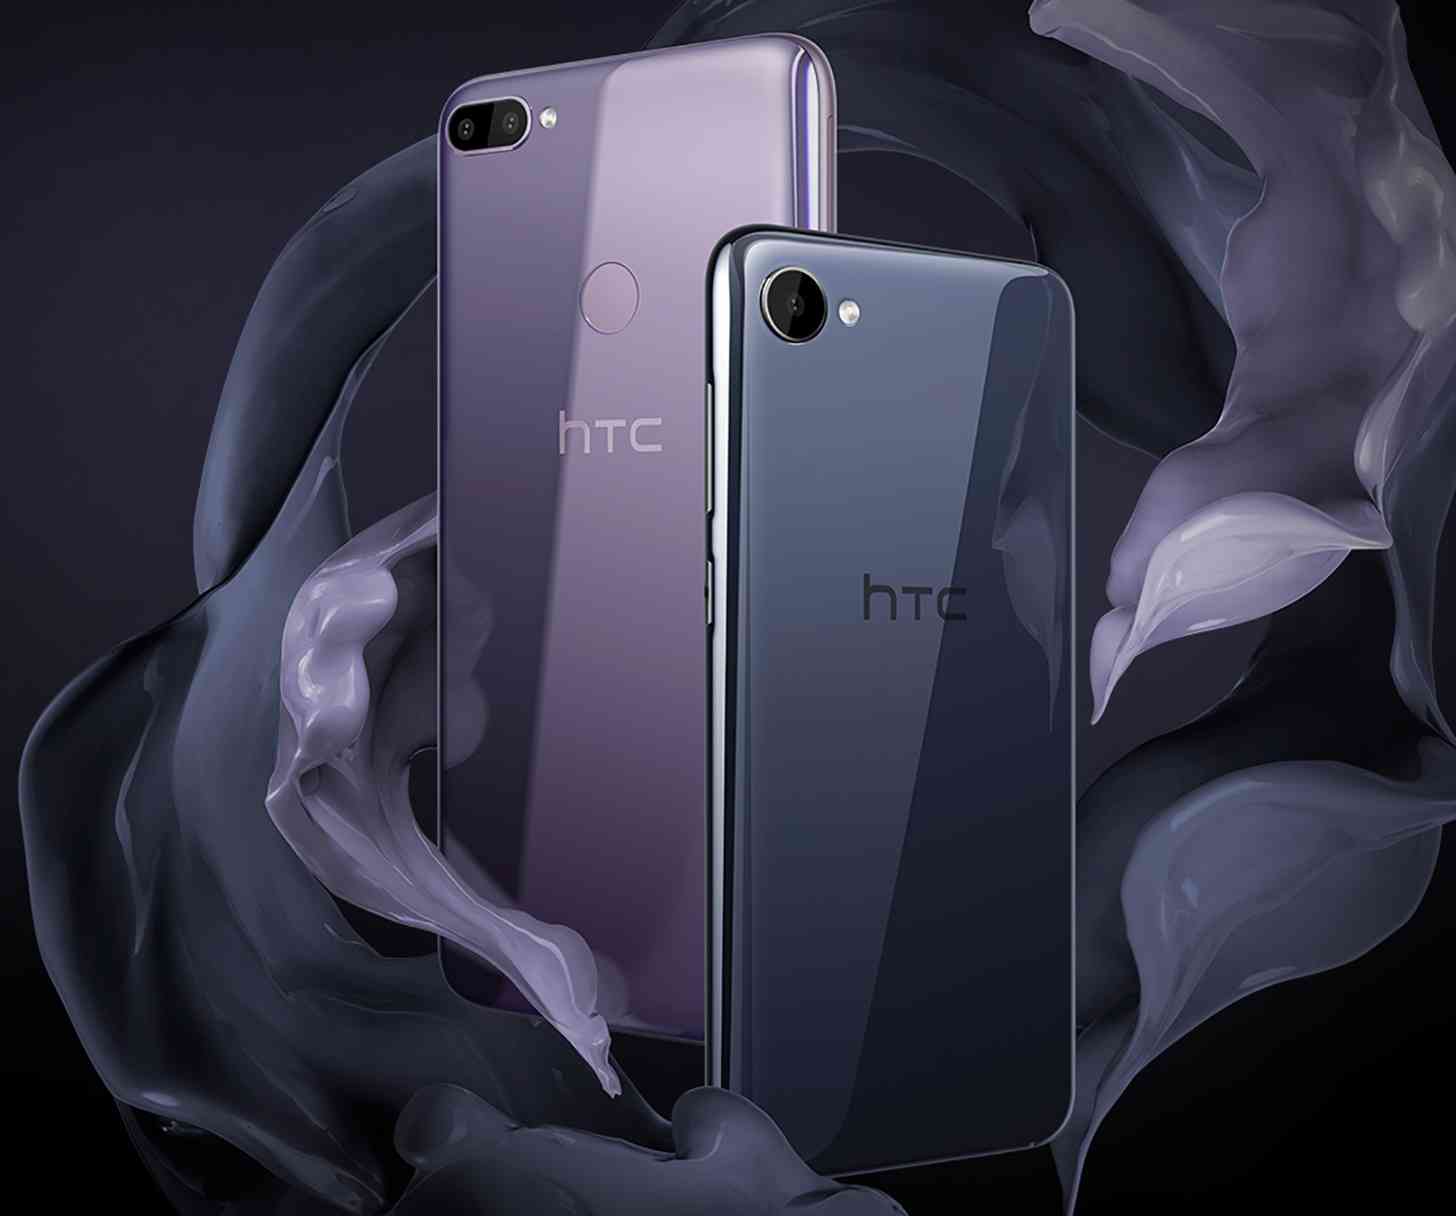 HTC Desire 12, Desire 12+ official